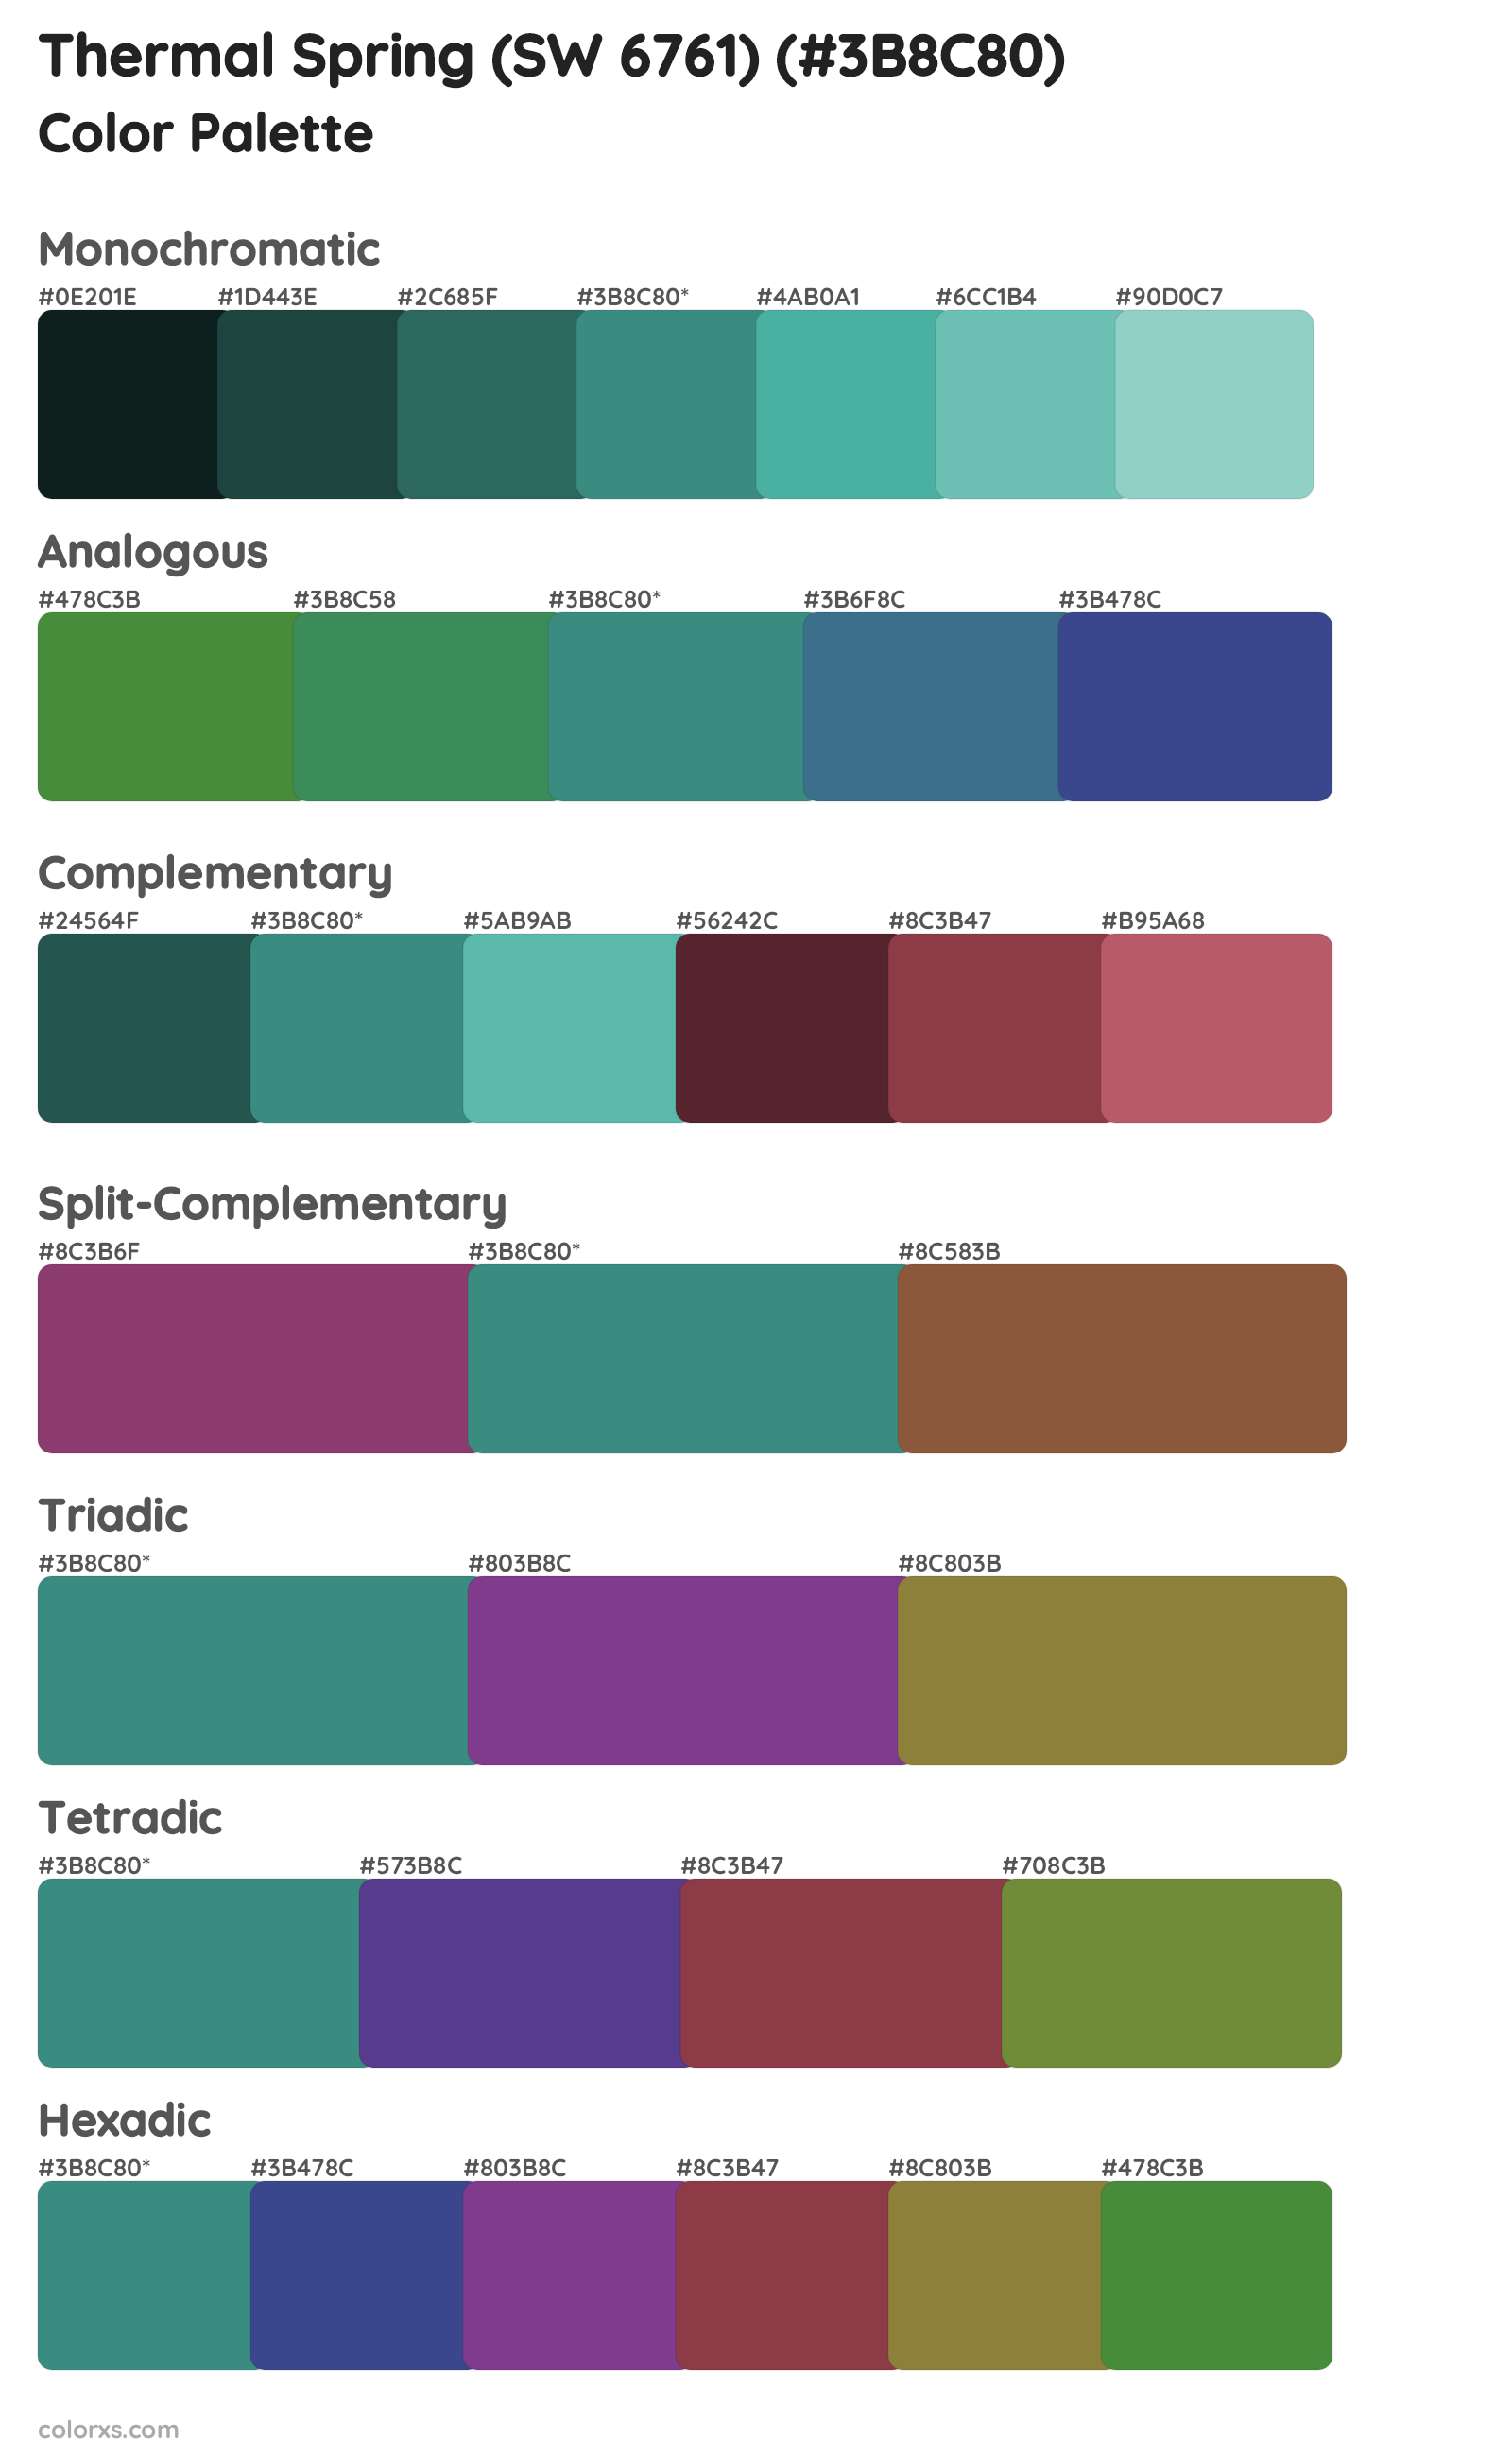 Thermal Spring (SW 6761) Color Scheme Palettes